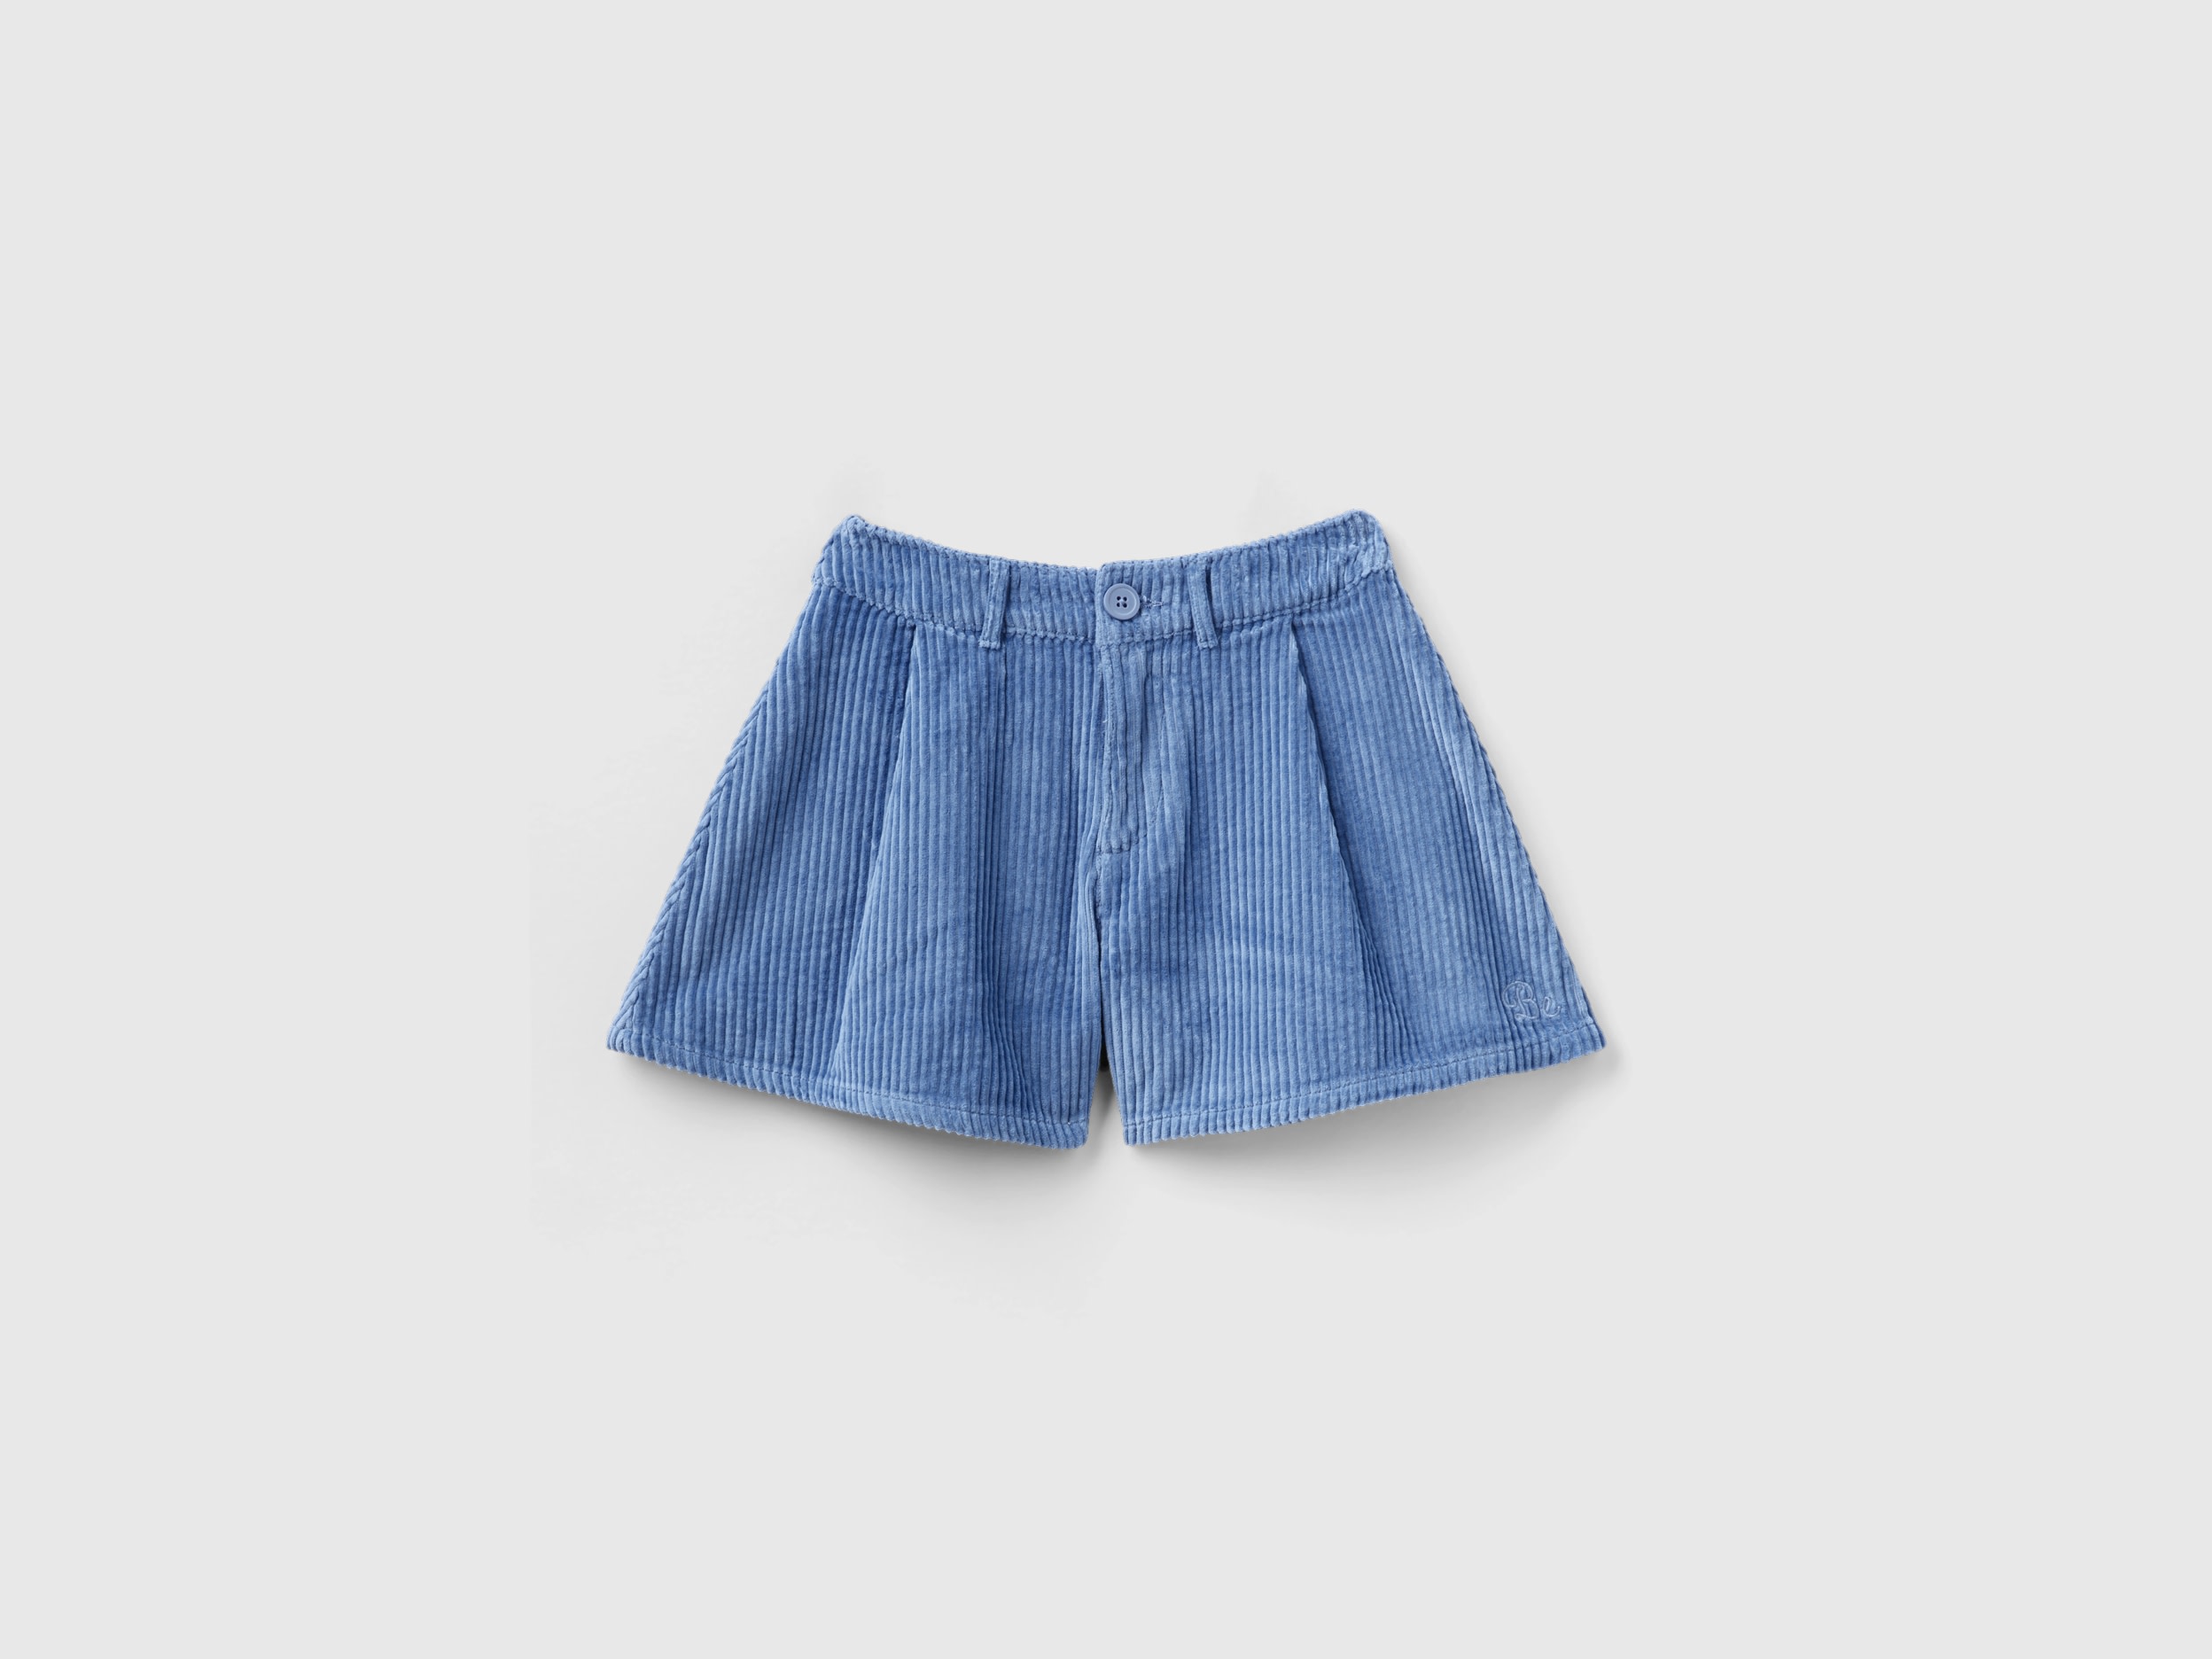 Benetton, Corduroy Bermuda Shorts, size 3XL, Light Blue, Kids